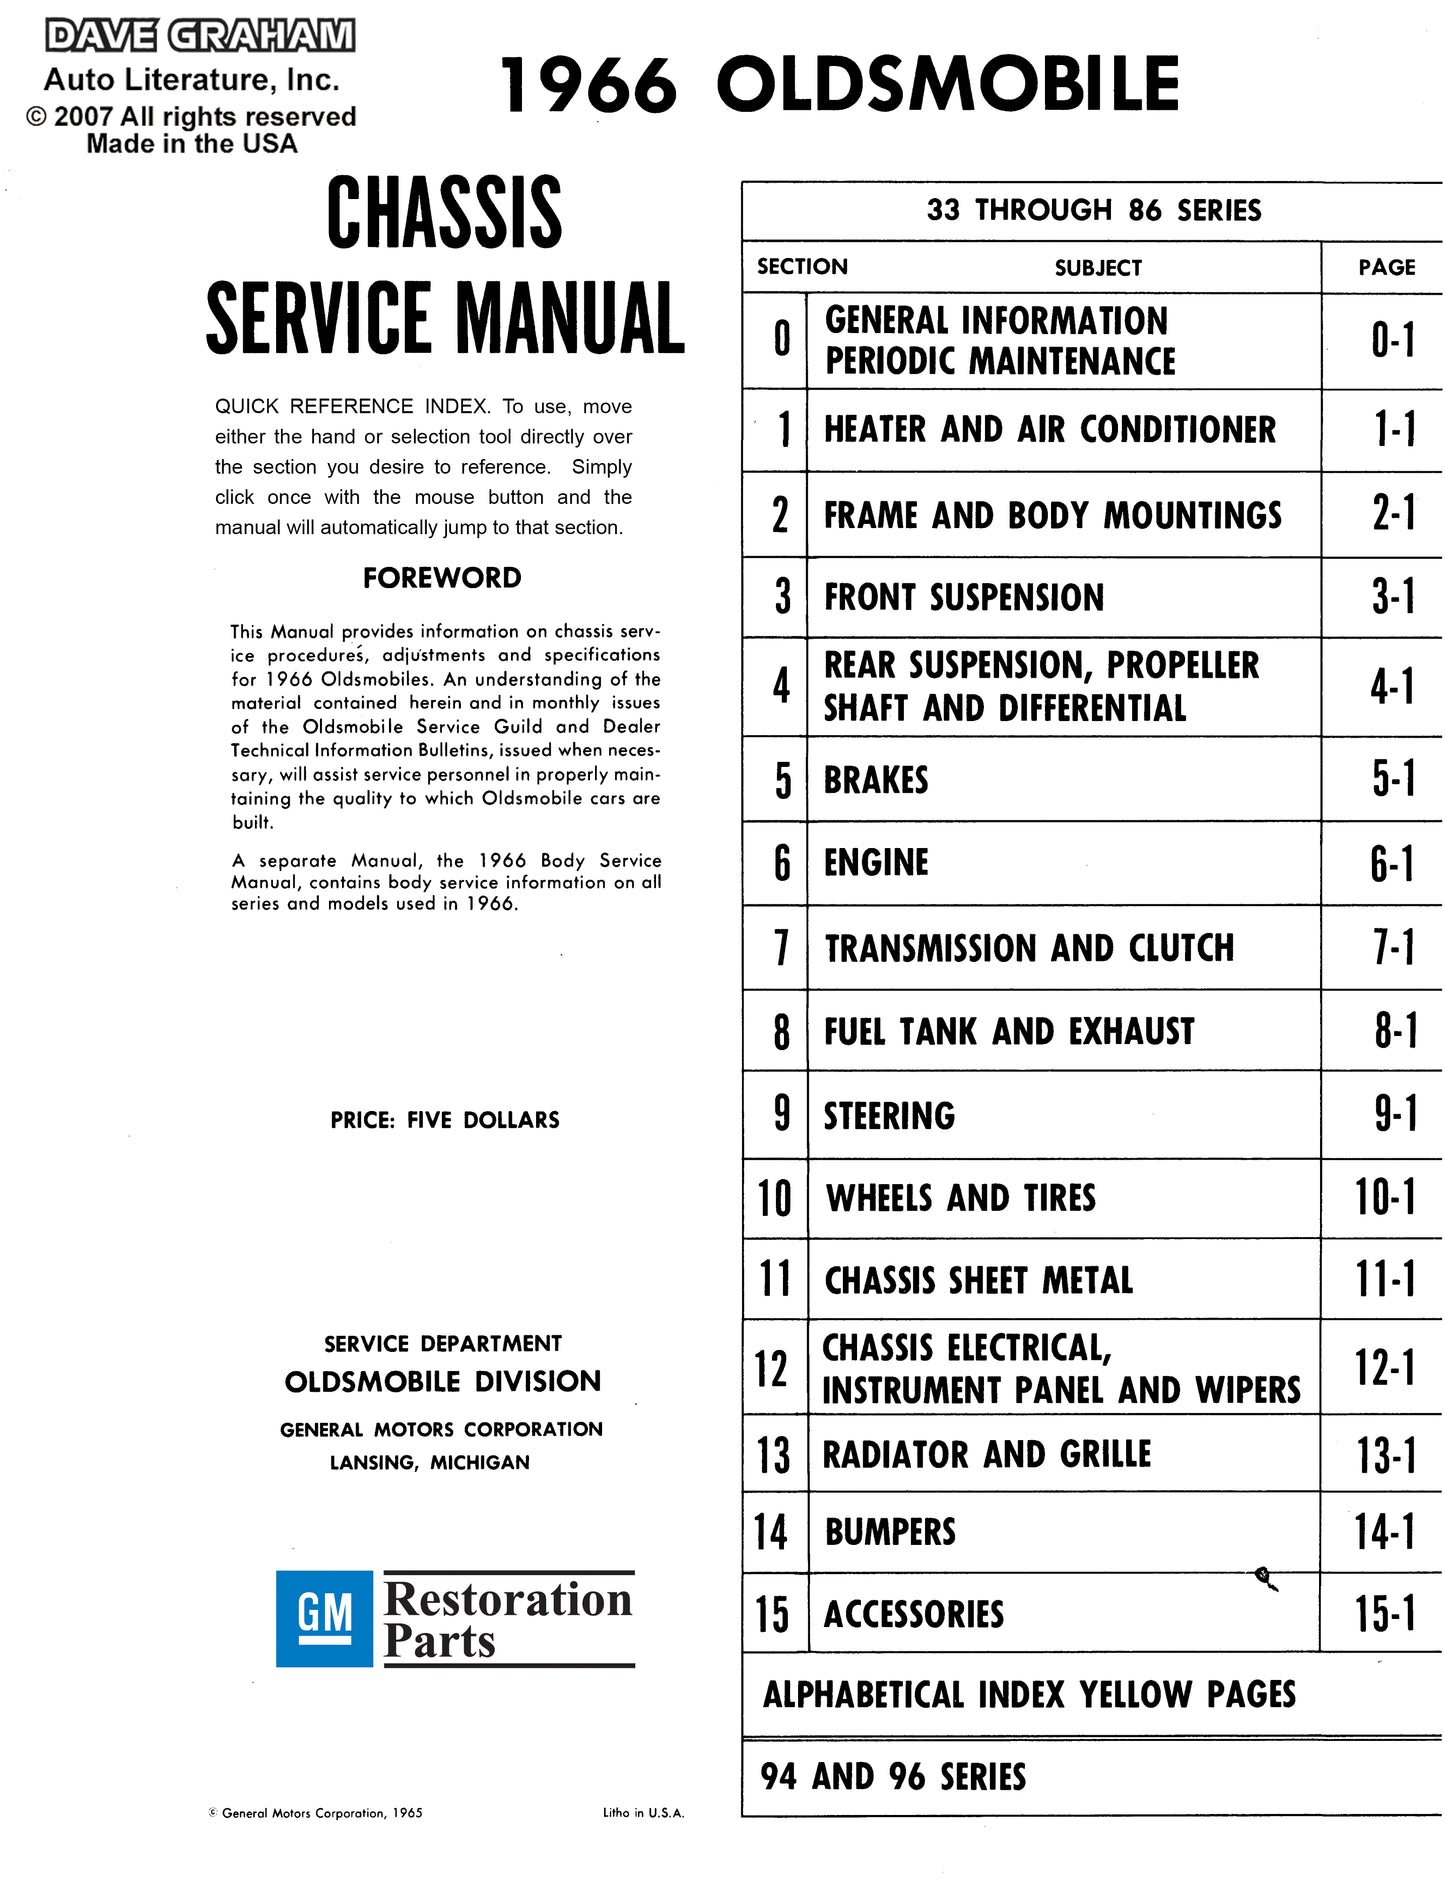 1966 Oldsmobile Shop Manual & Body Manual - All Models